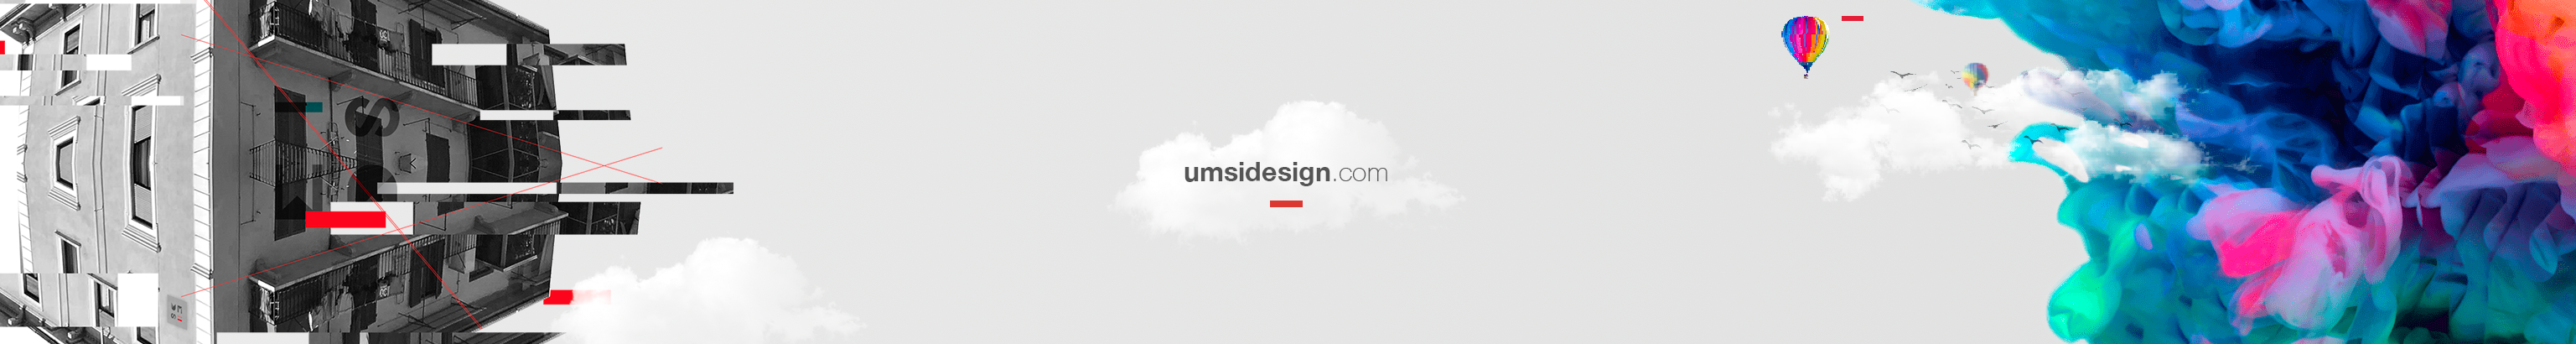 UMSI Design's profile banner